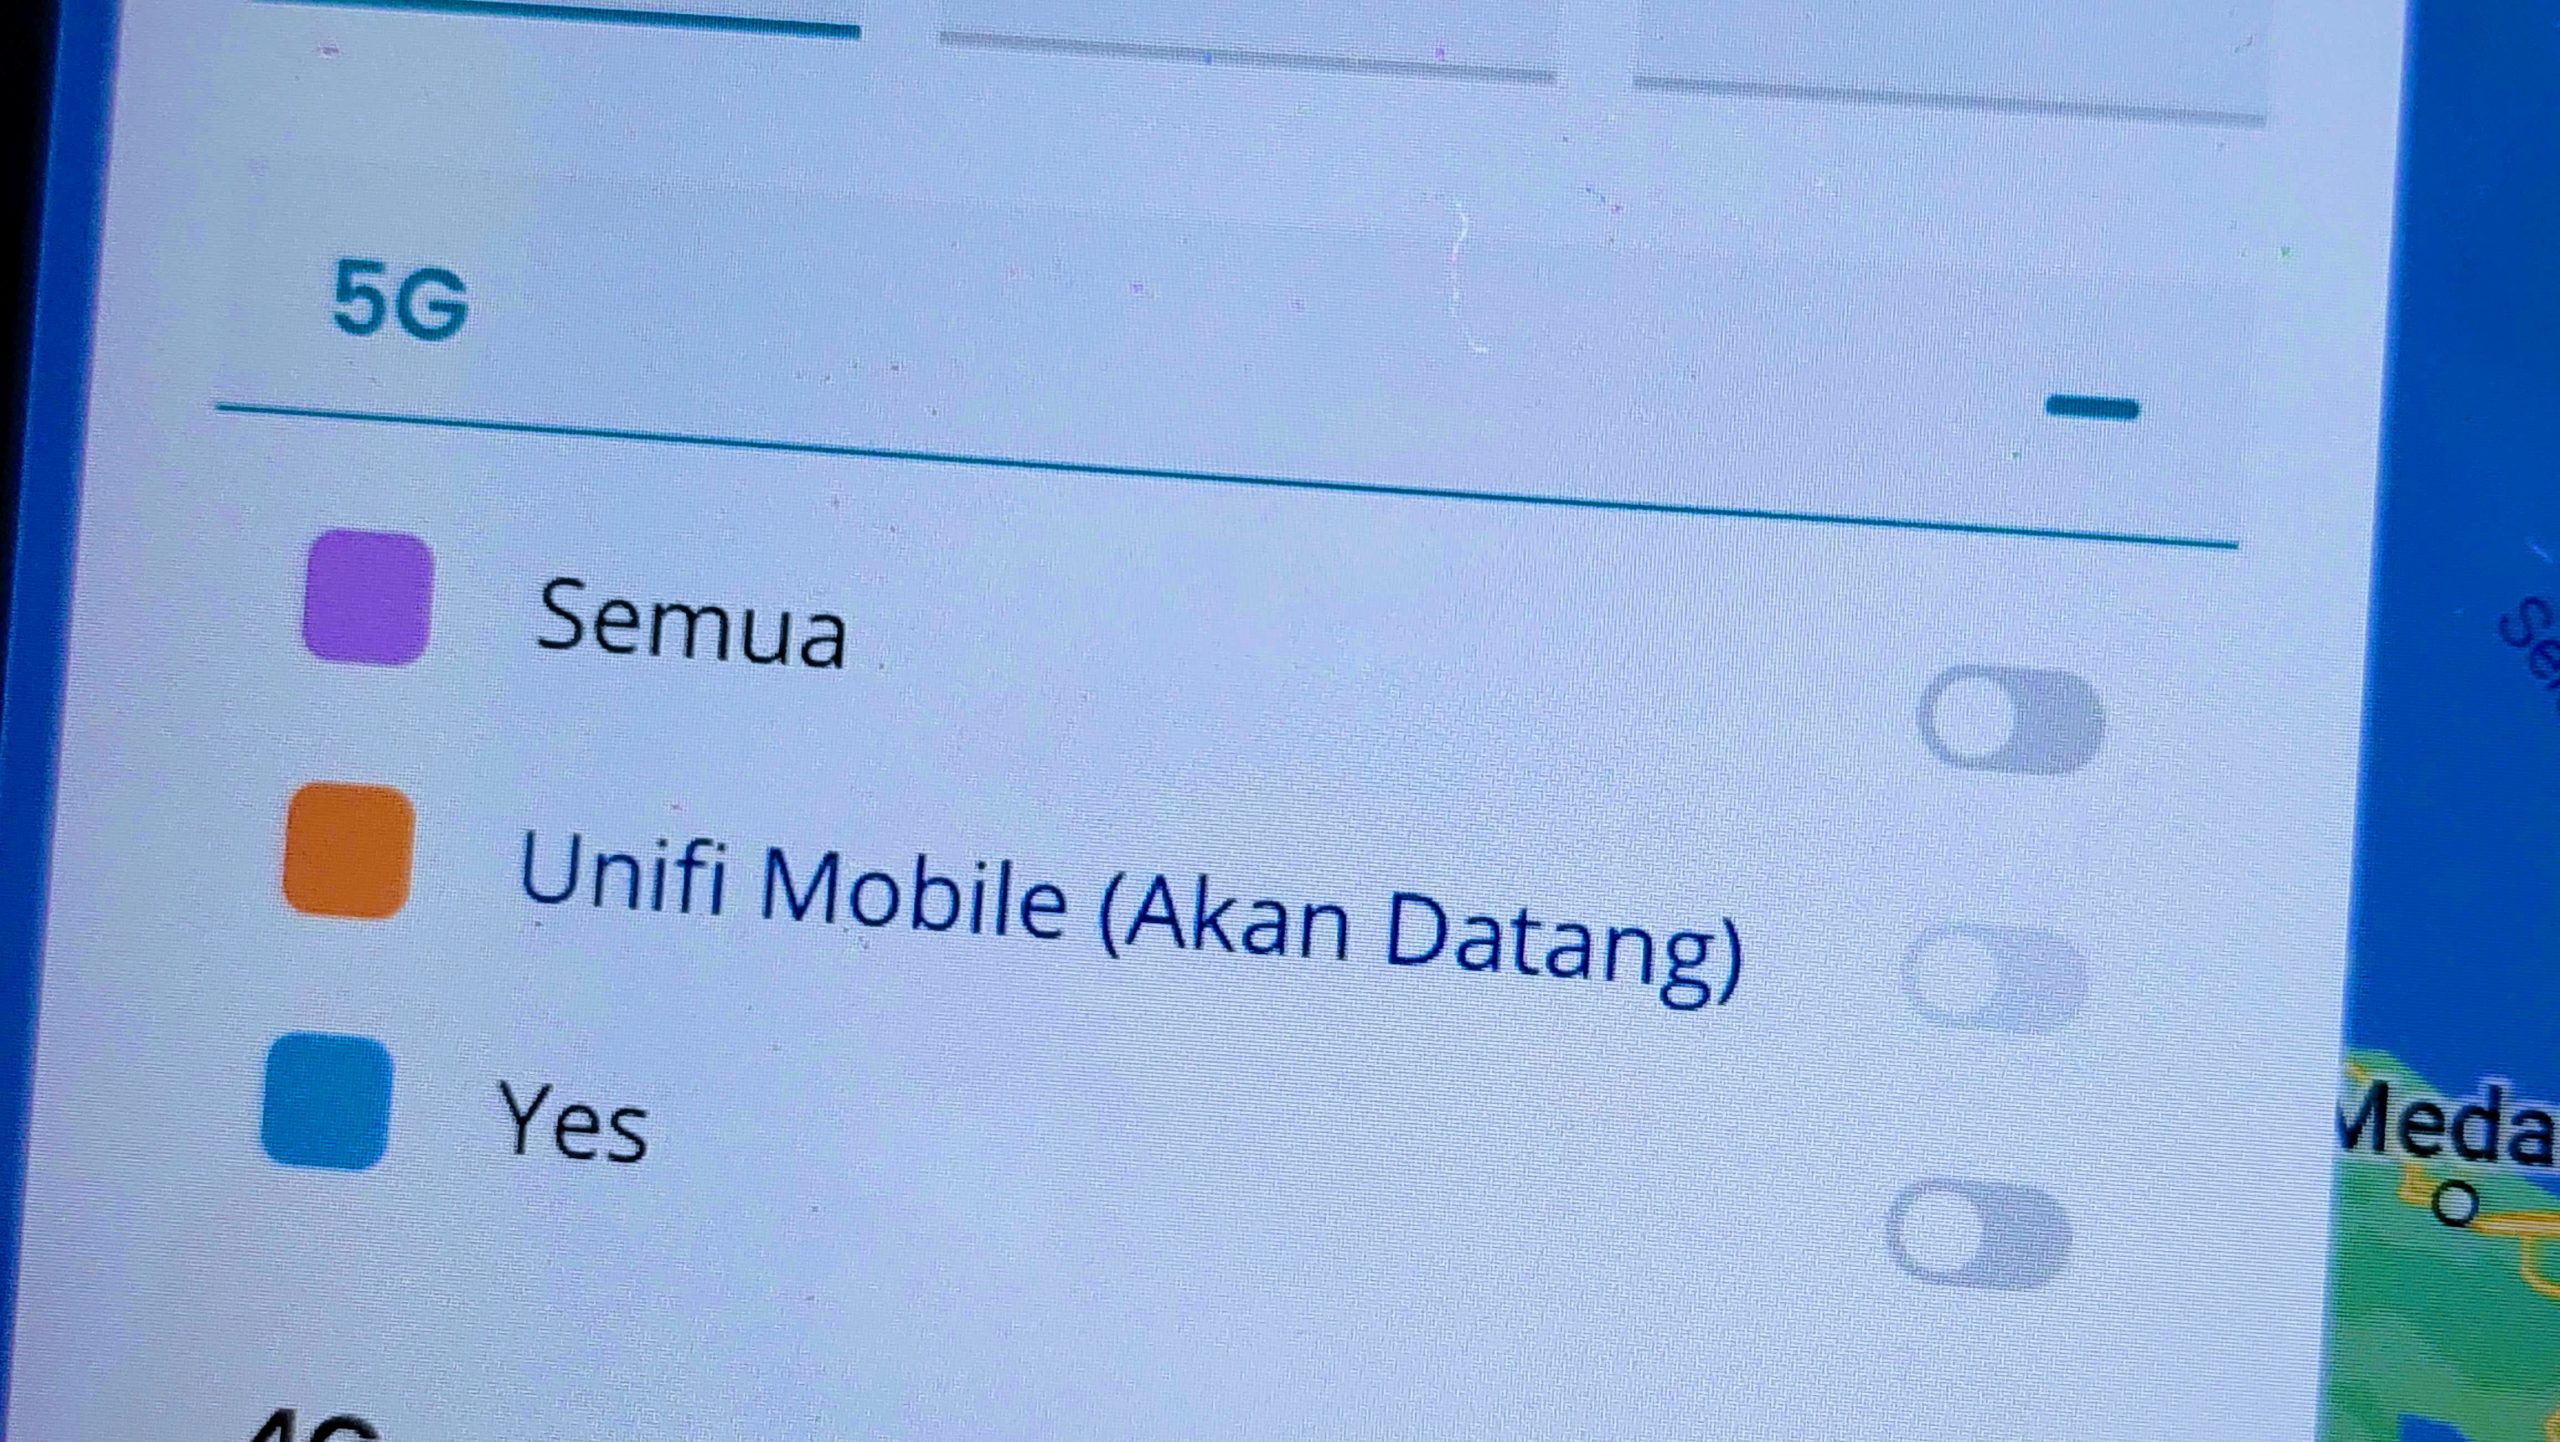 SKMM : Unifi Mobile 5G Akan Datang